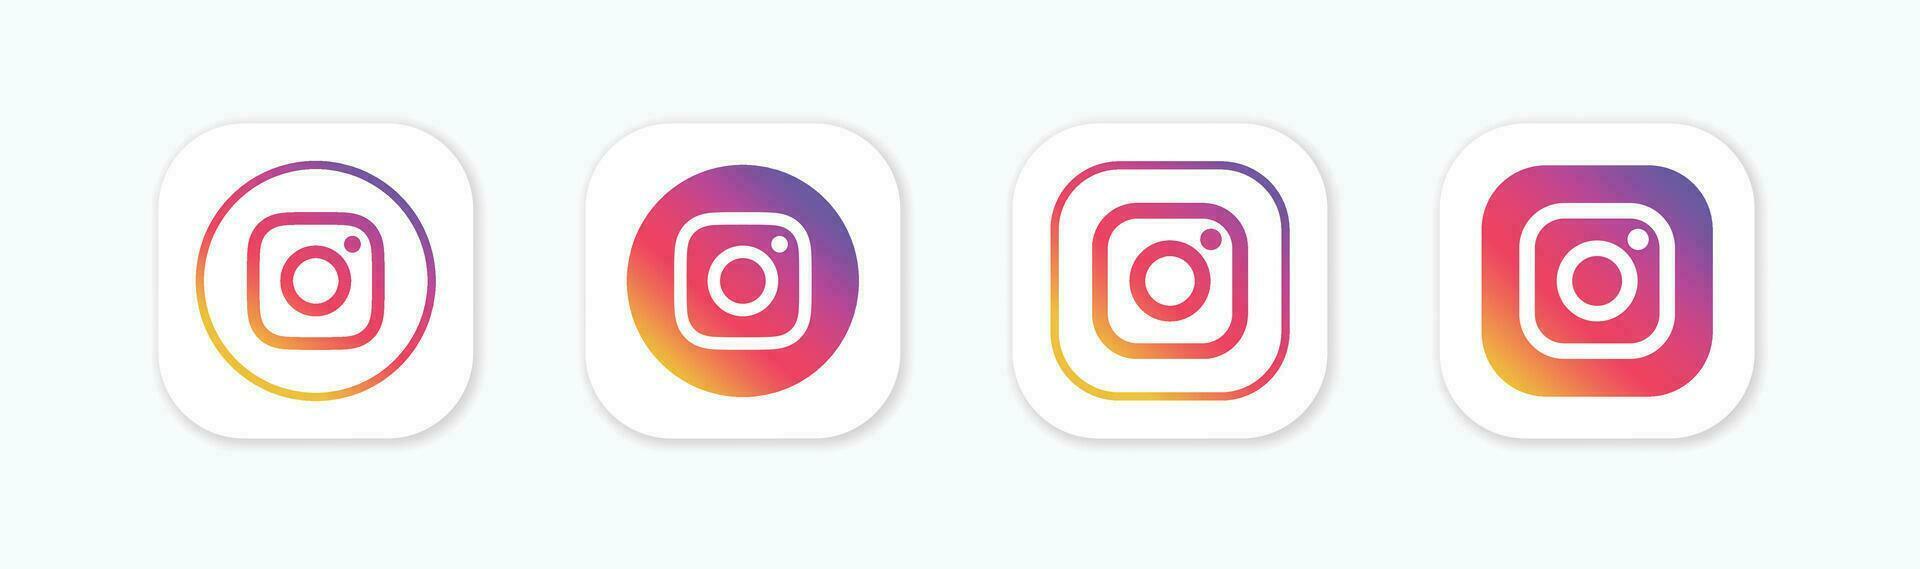 Set of Instagram social media logo icons. Instagram icon. Simple vector illustration.